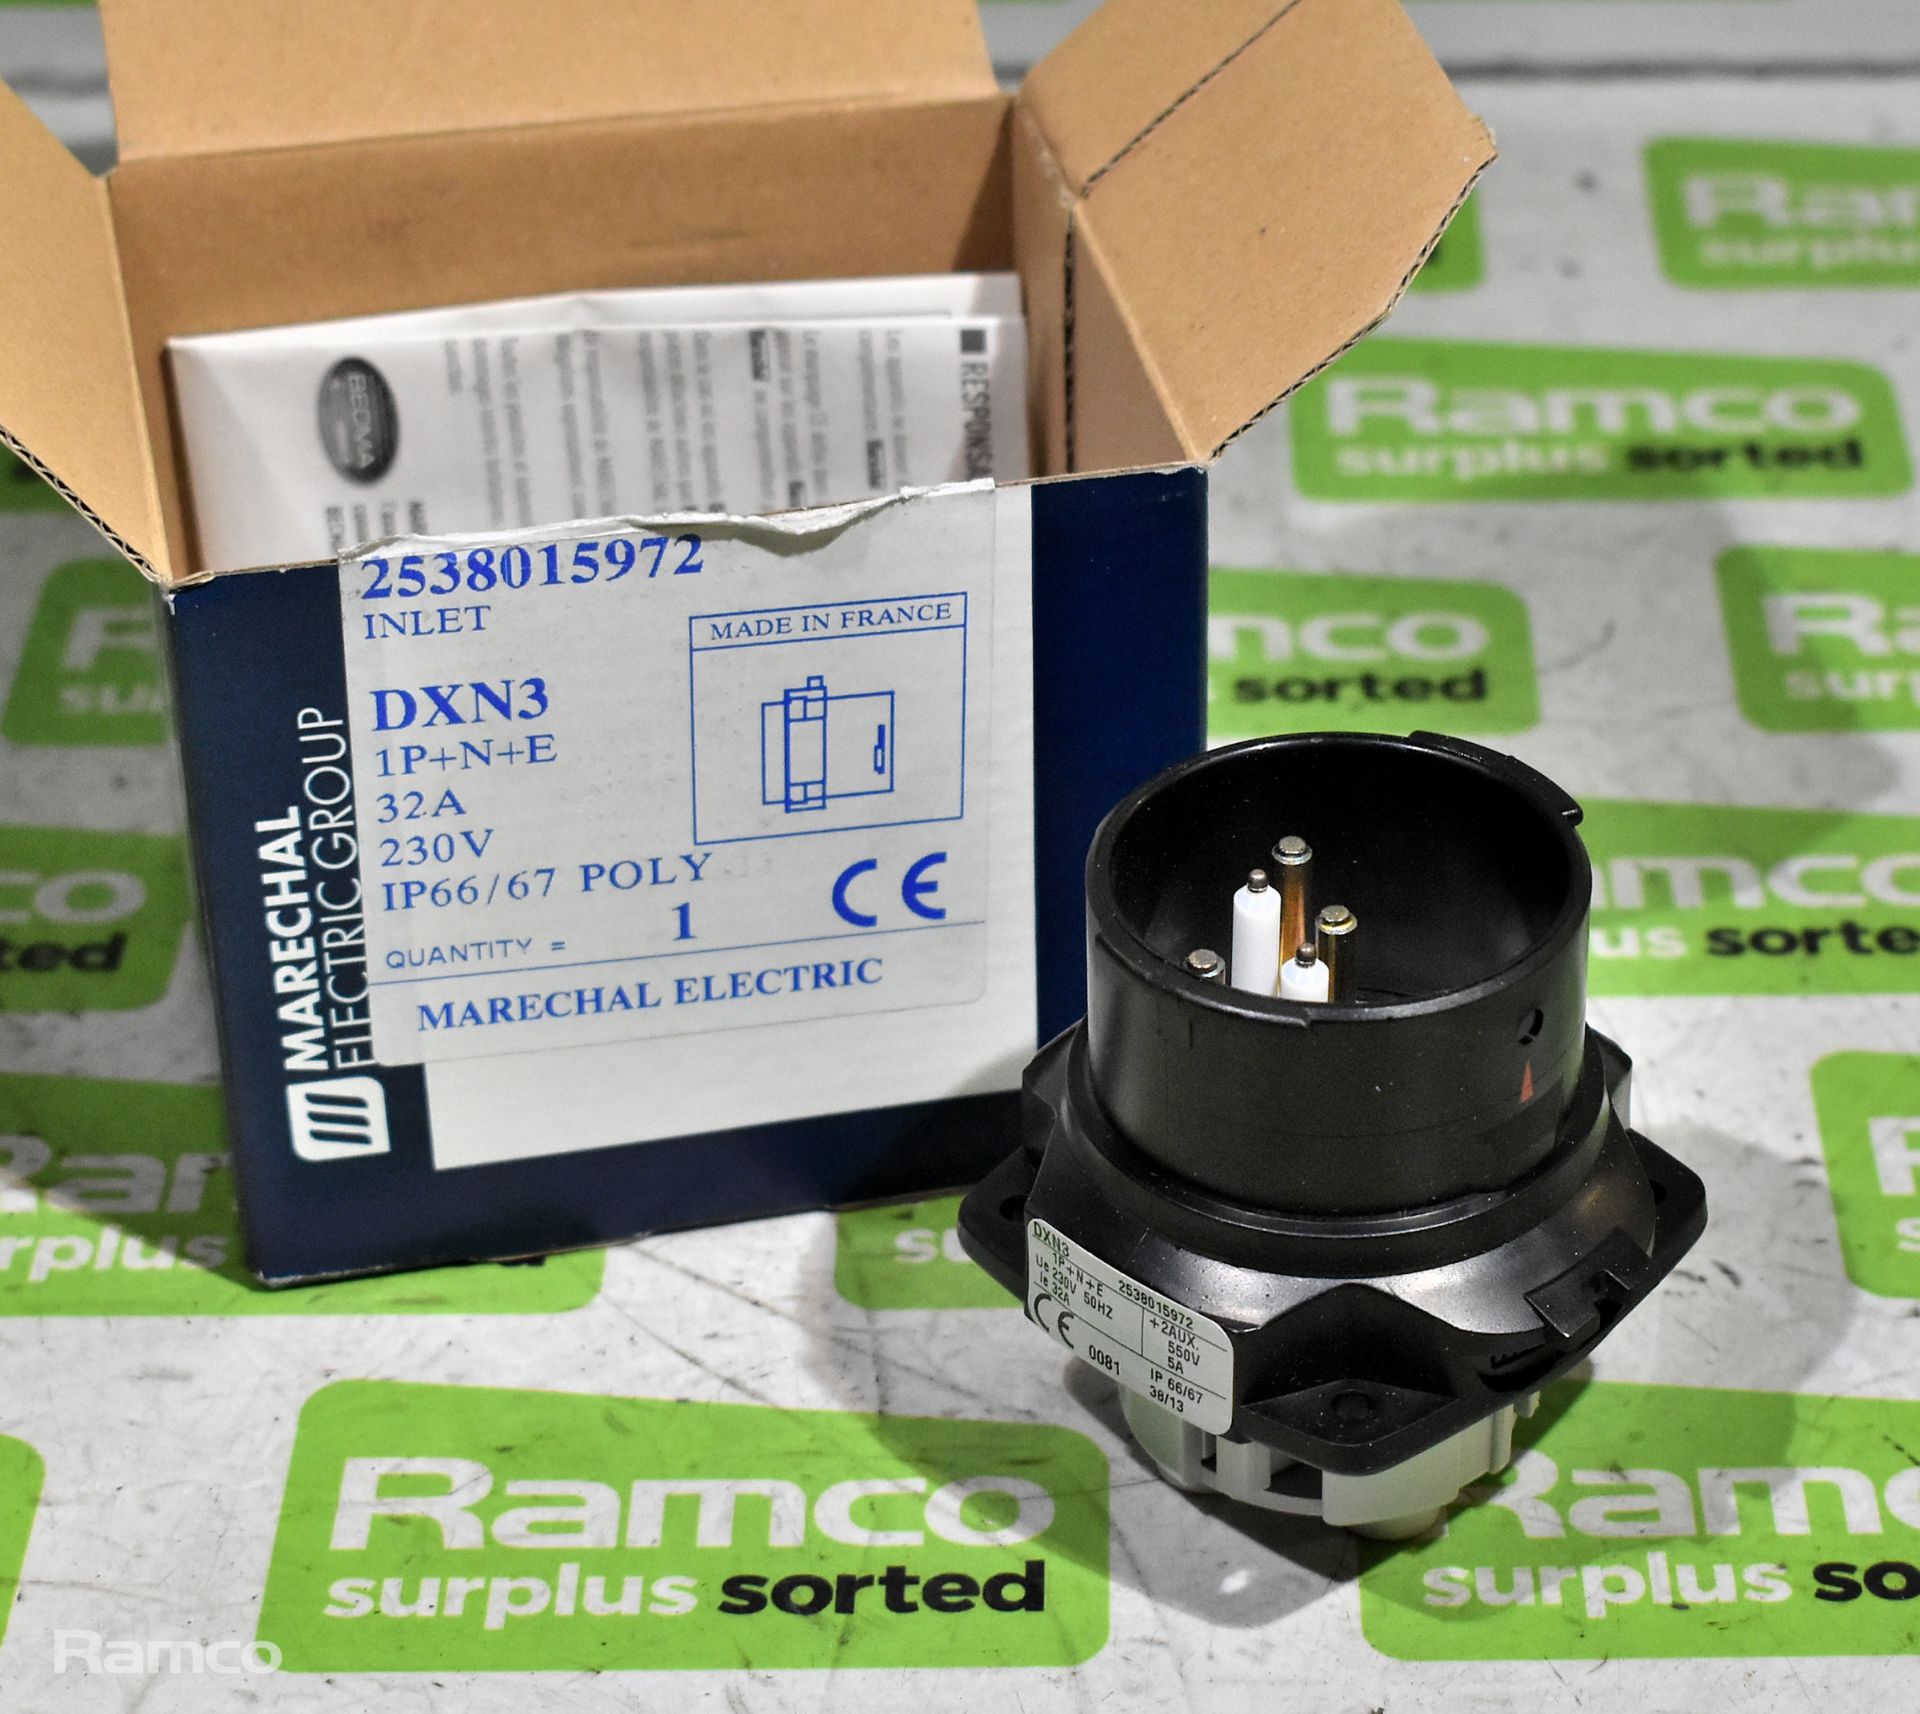 Electrical supplies - Palazzoli 473423 16A 240-415V 3P+N+E plugs, 4 pin 110V 5A plugs - Image 4 of 6